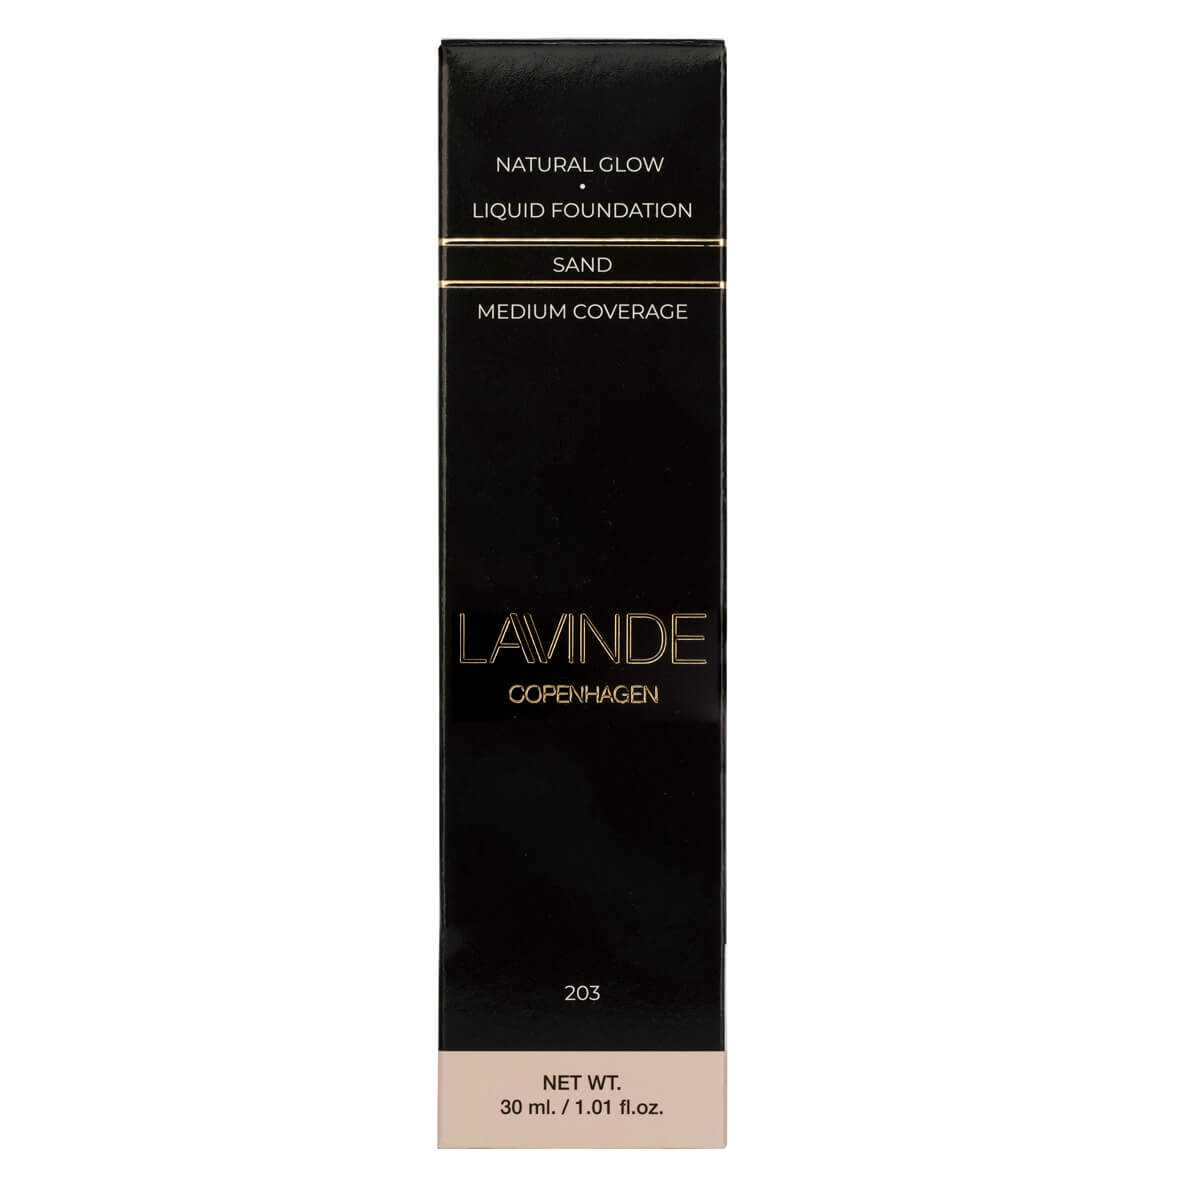 Lavinde Copenhagen NATURAL GLOW Liquid Foundation Sand (203) 30ml - Lavinde Copenhagen - Cosmetics - Buump